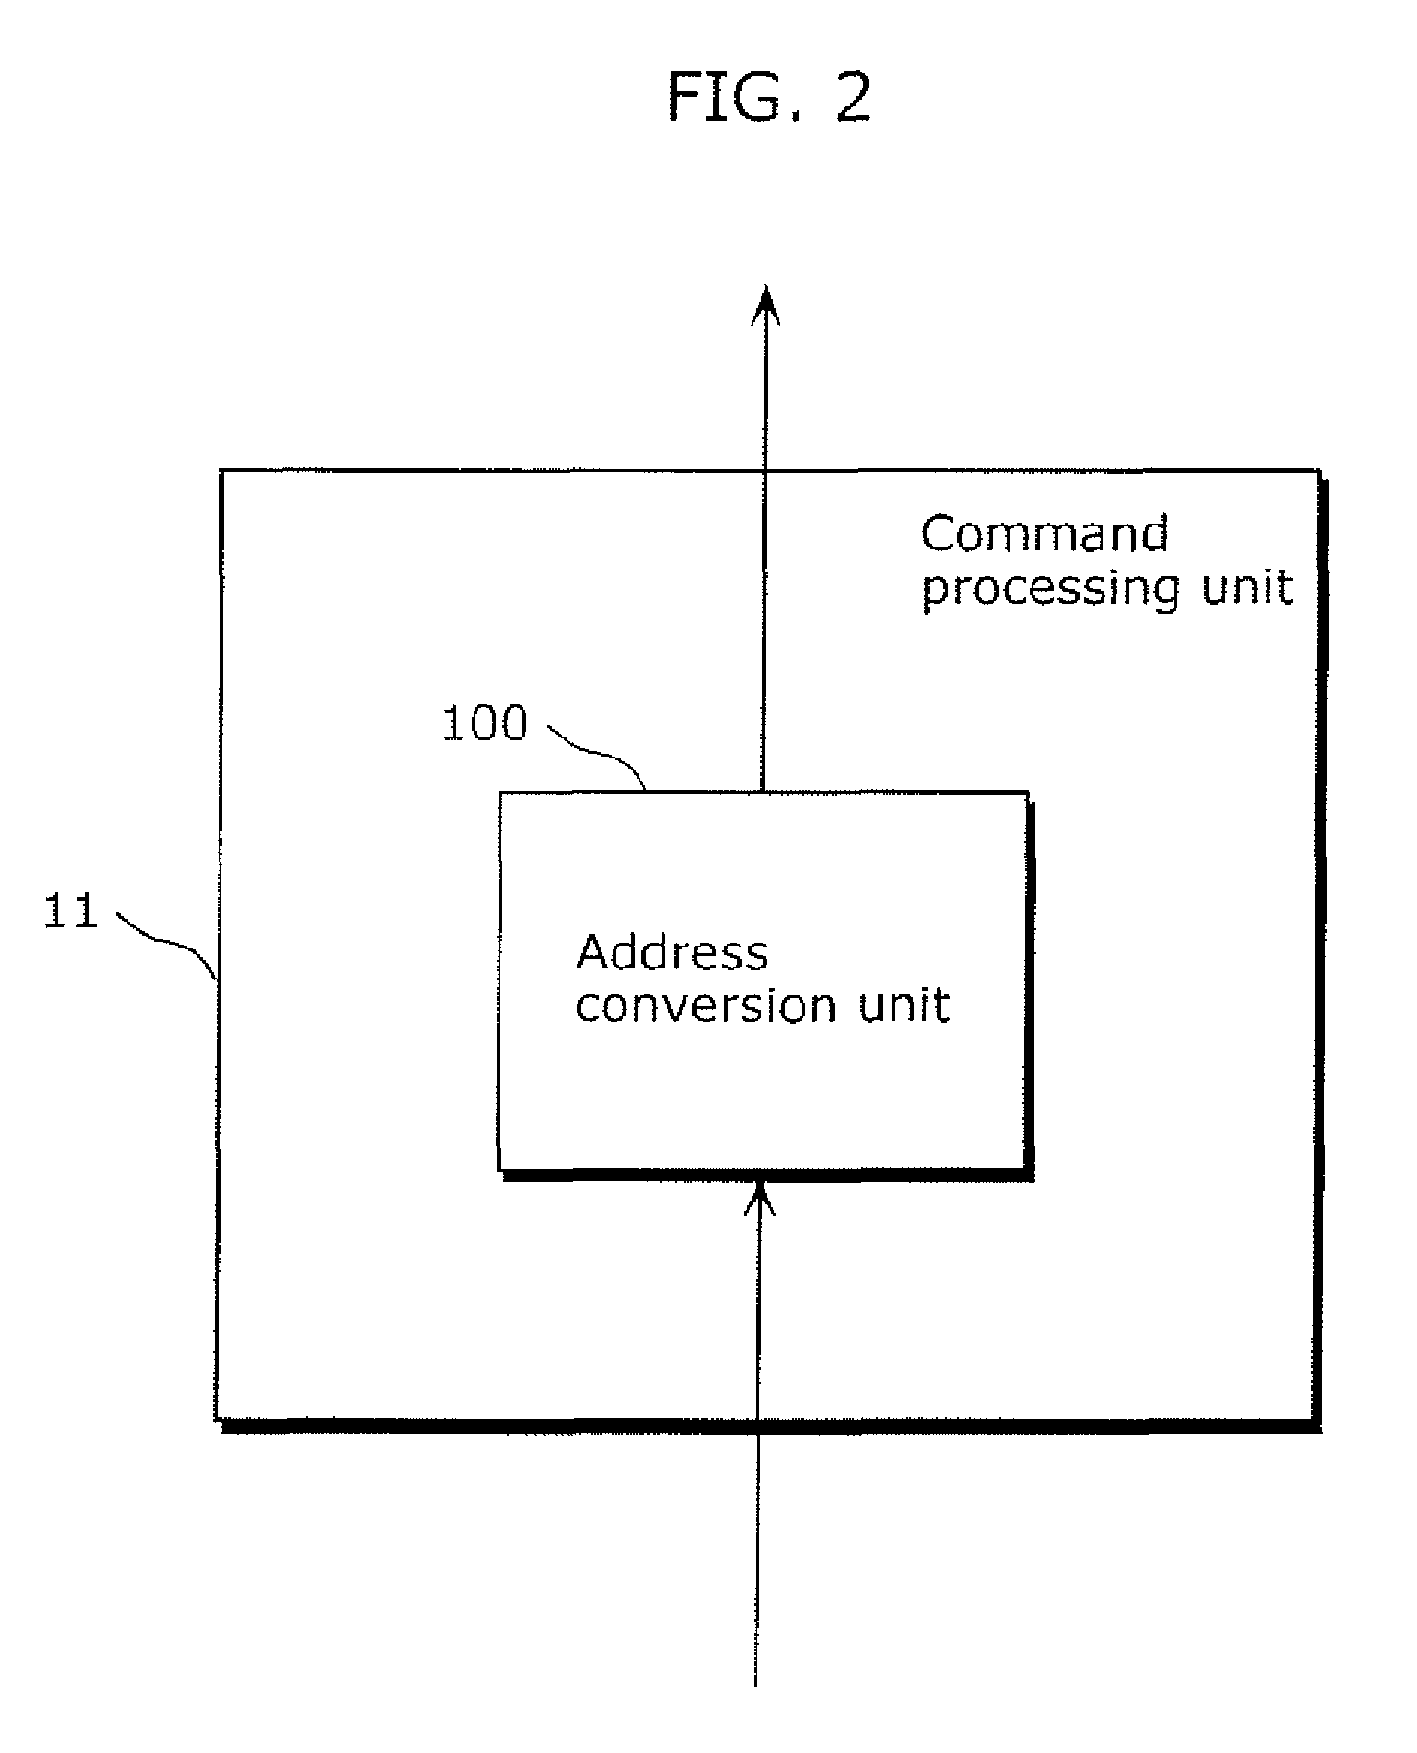 Burst memory access method to rectangular area